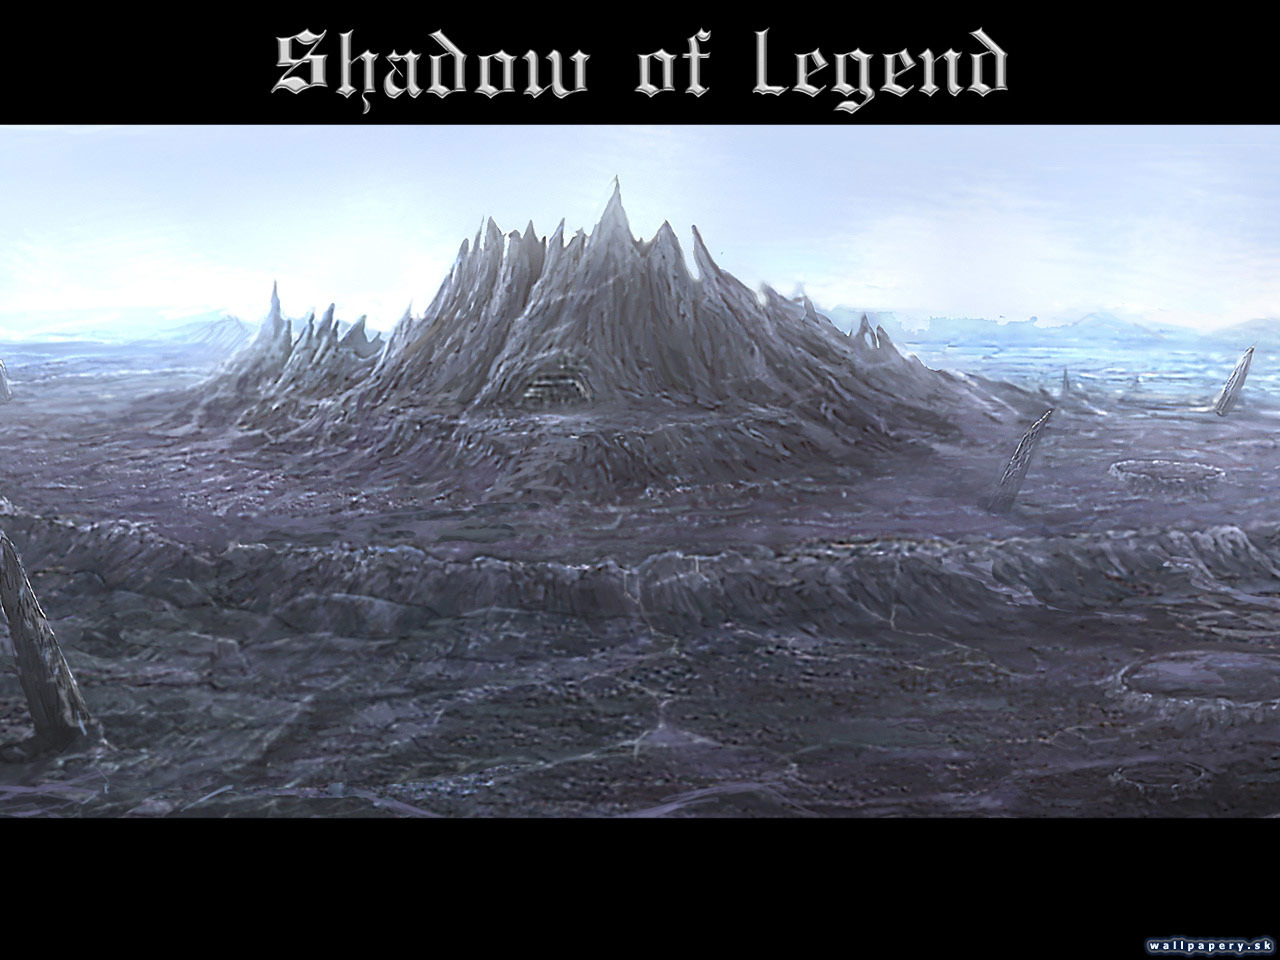 Shadow of Legend - wallpaper 16